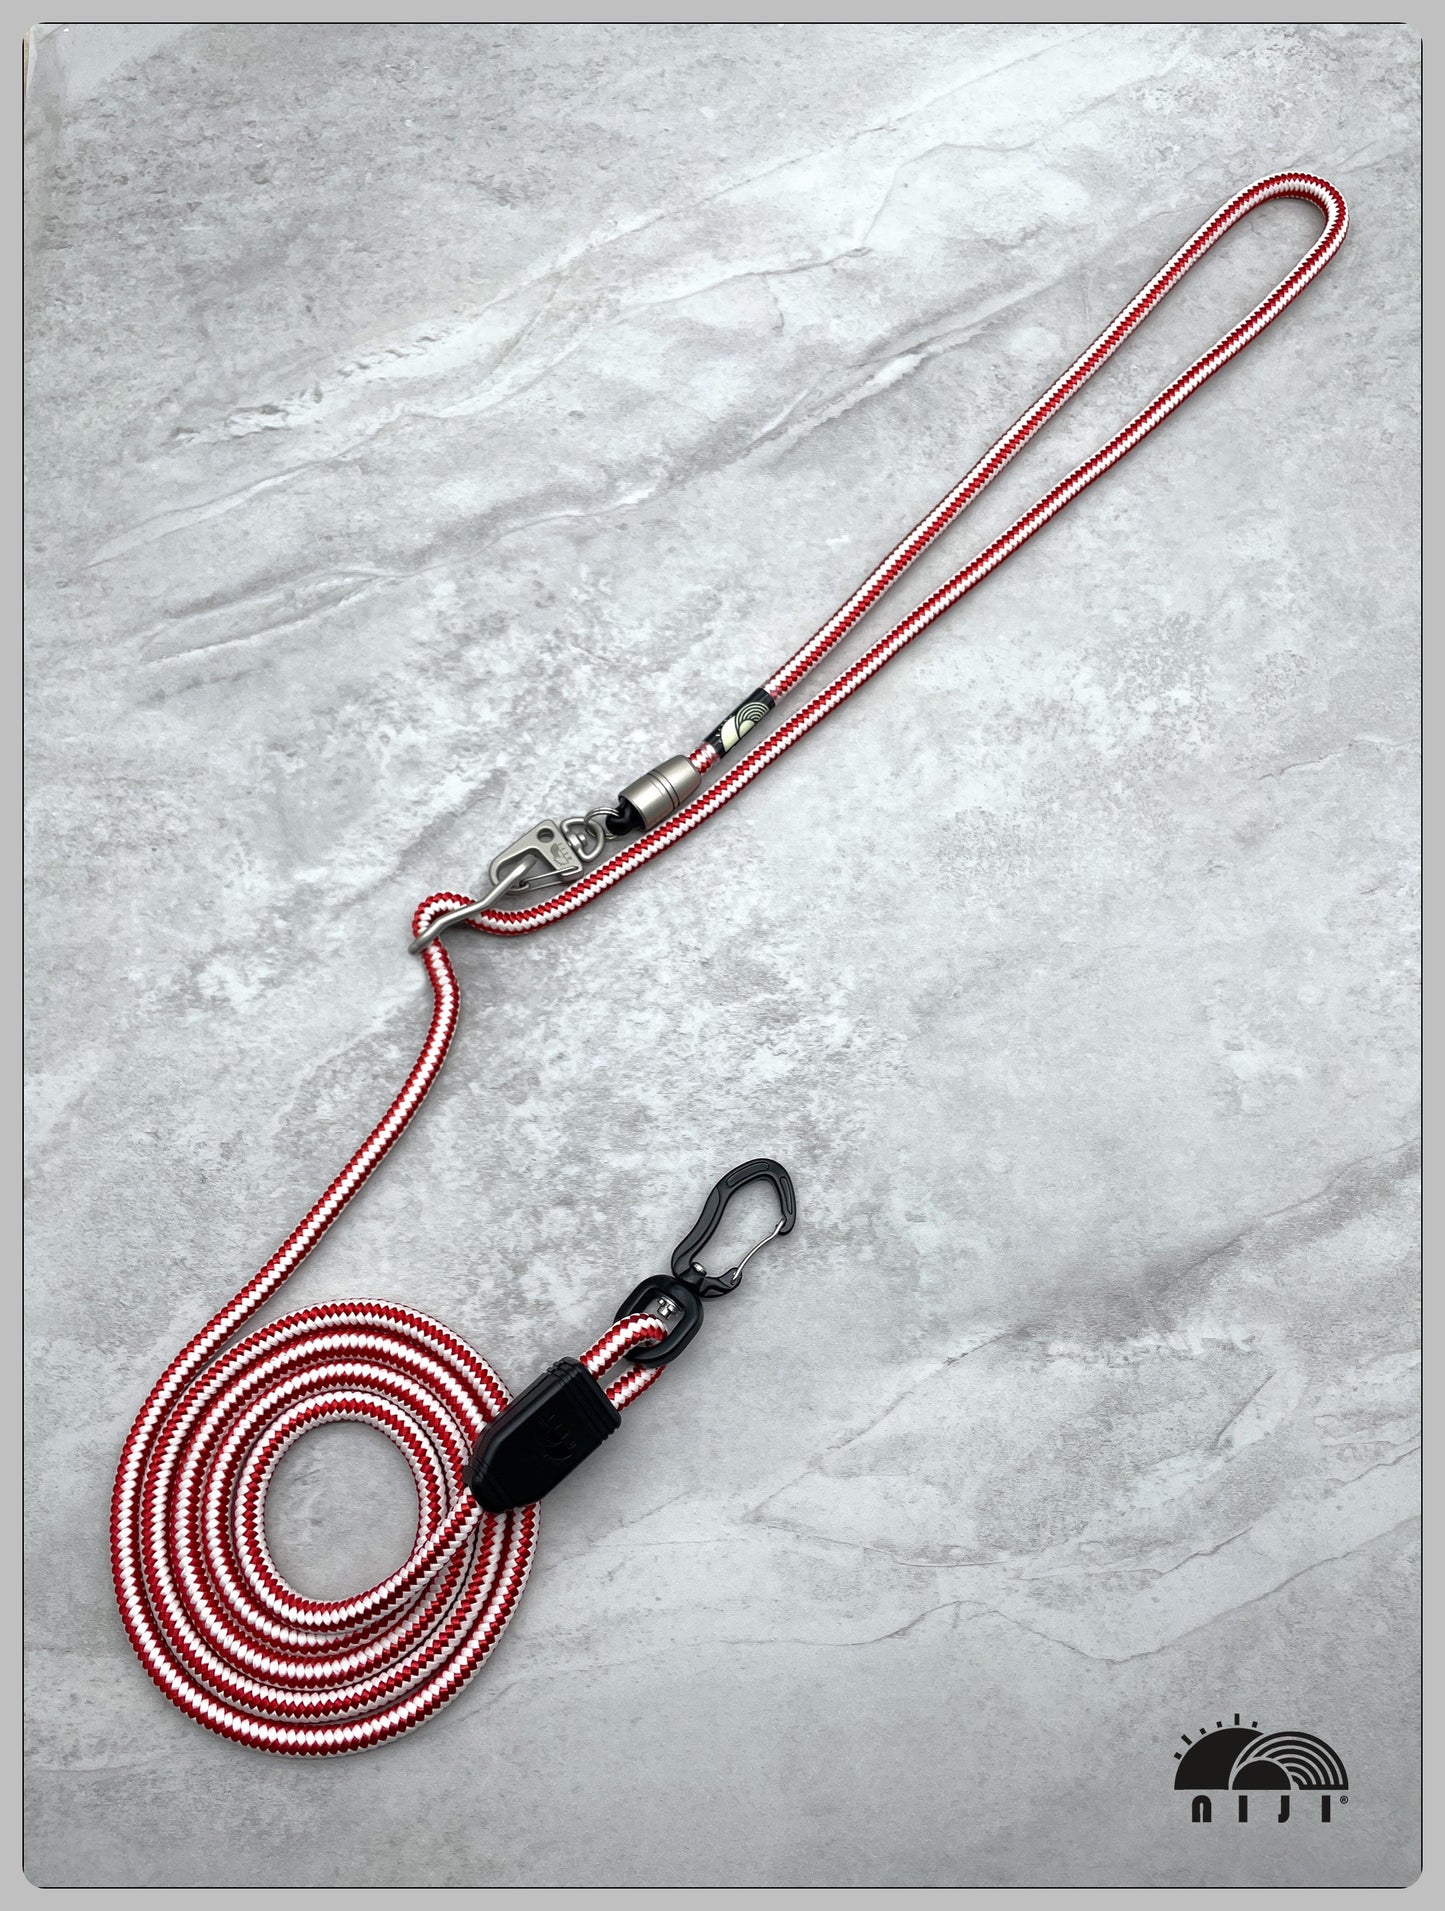 niji luminous dog leash φ8.5mm wave pattern red color 犬用2ways 蓄光リード